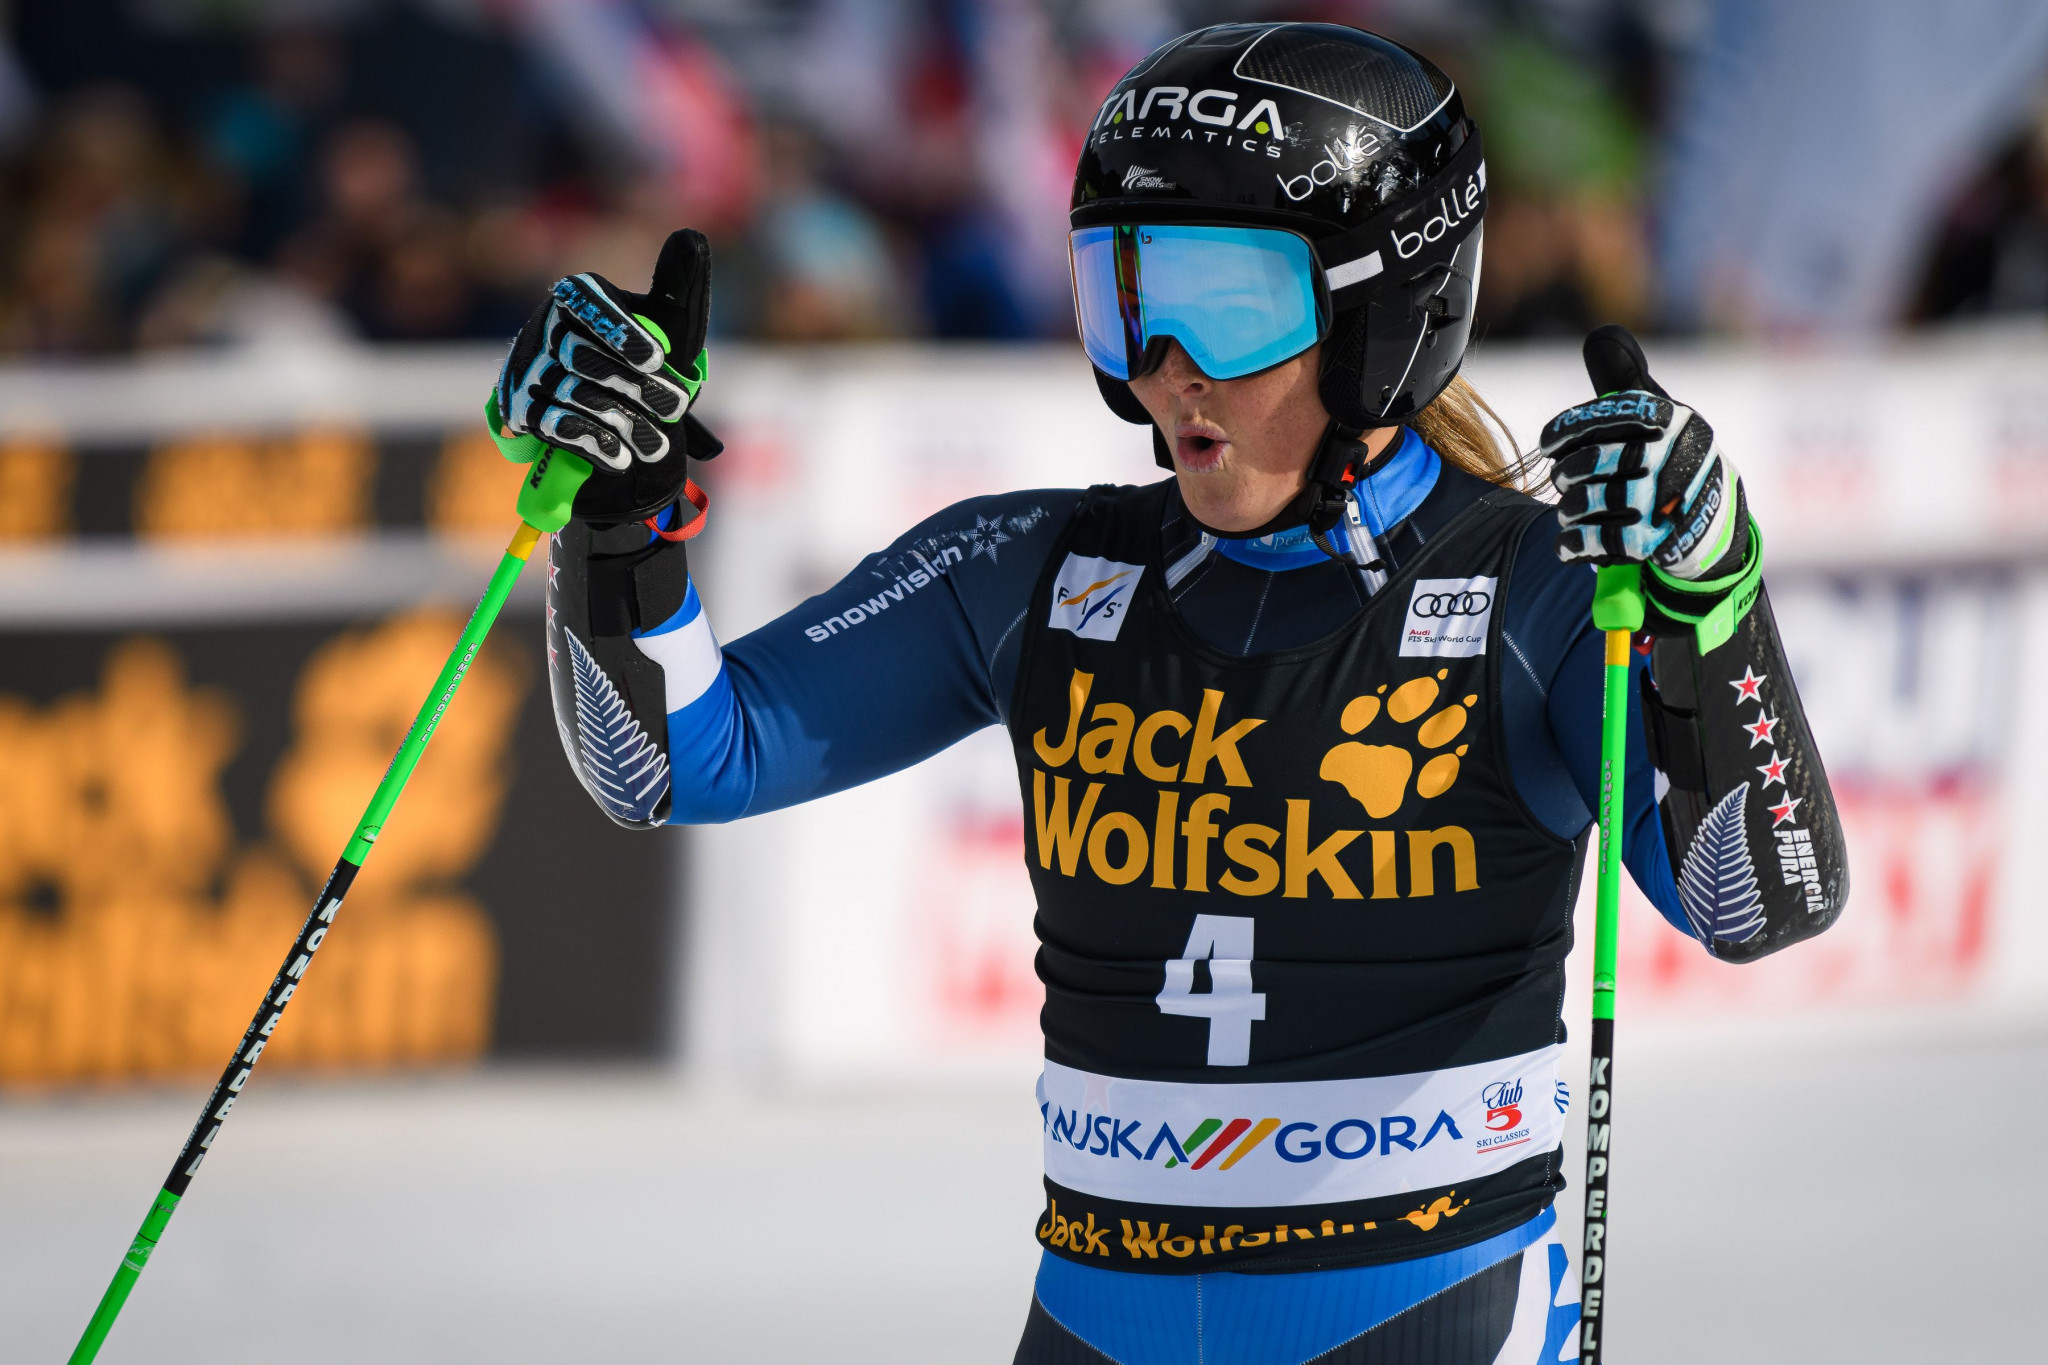 Teenager Robinson earns second FIS Alpine Ski World Cup win at Kranjska Gora